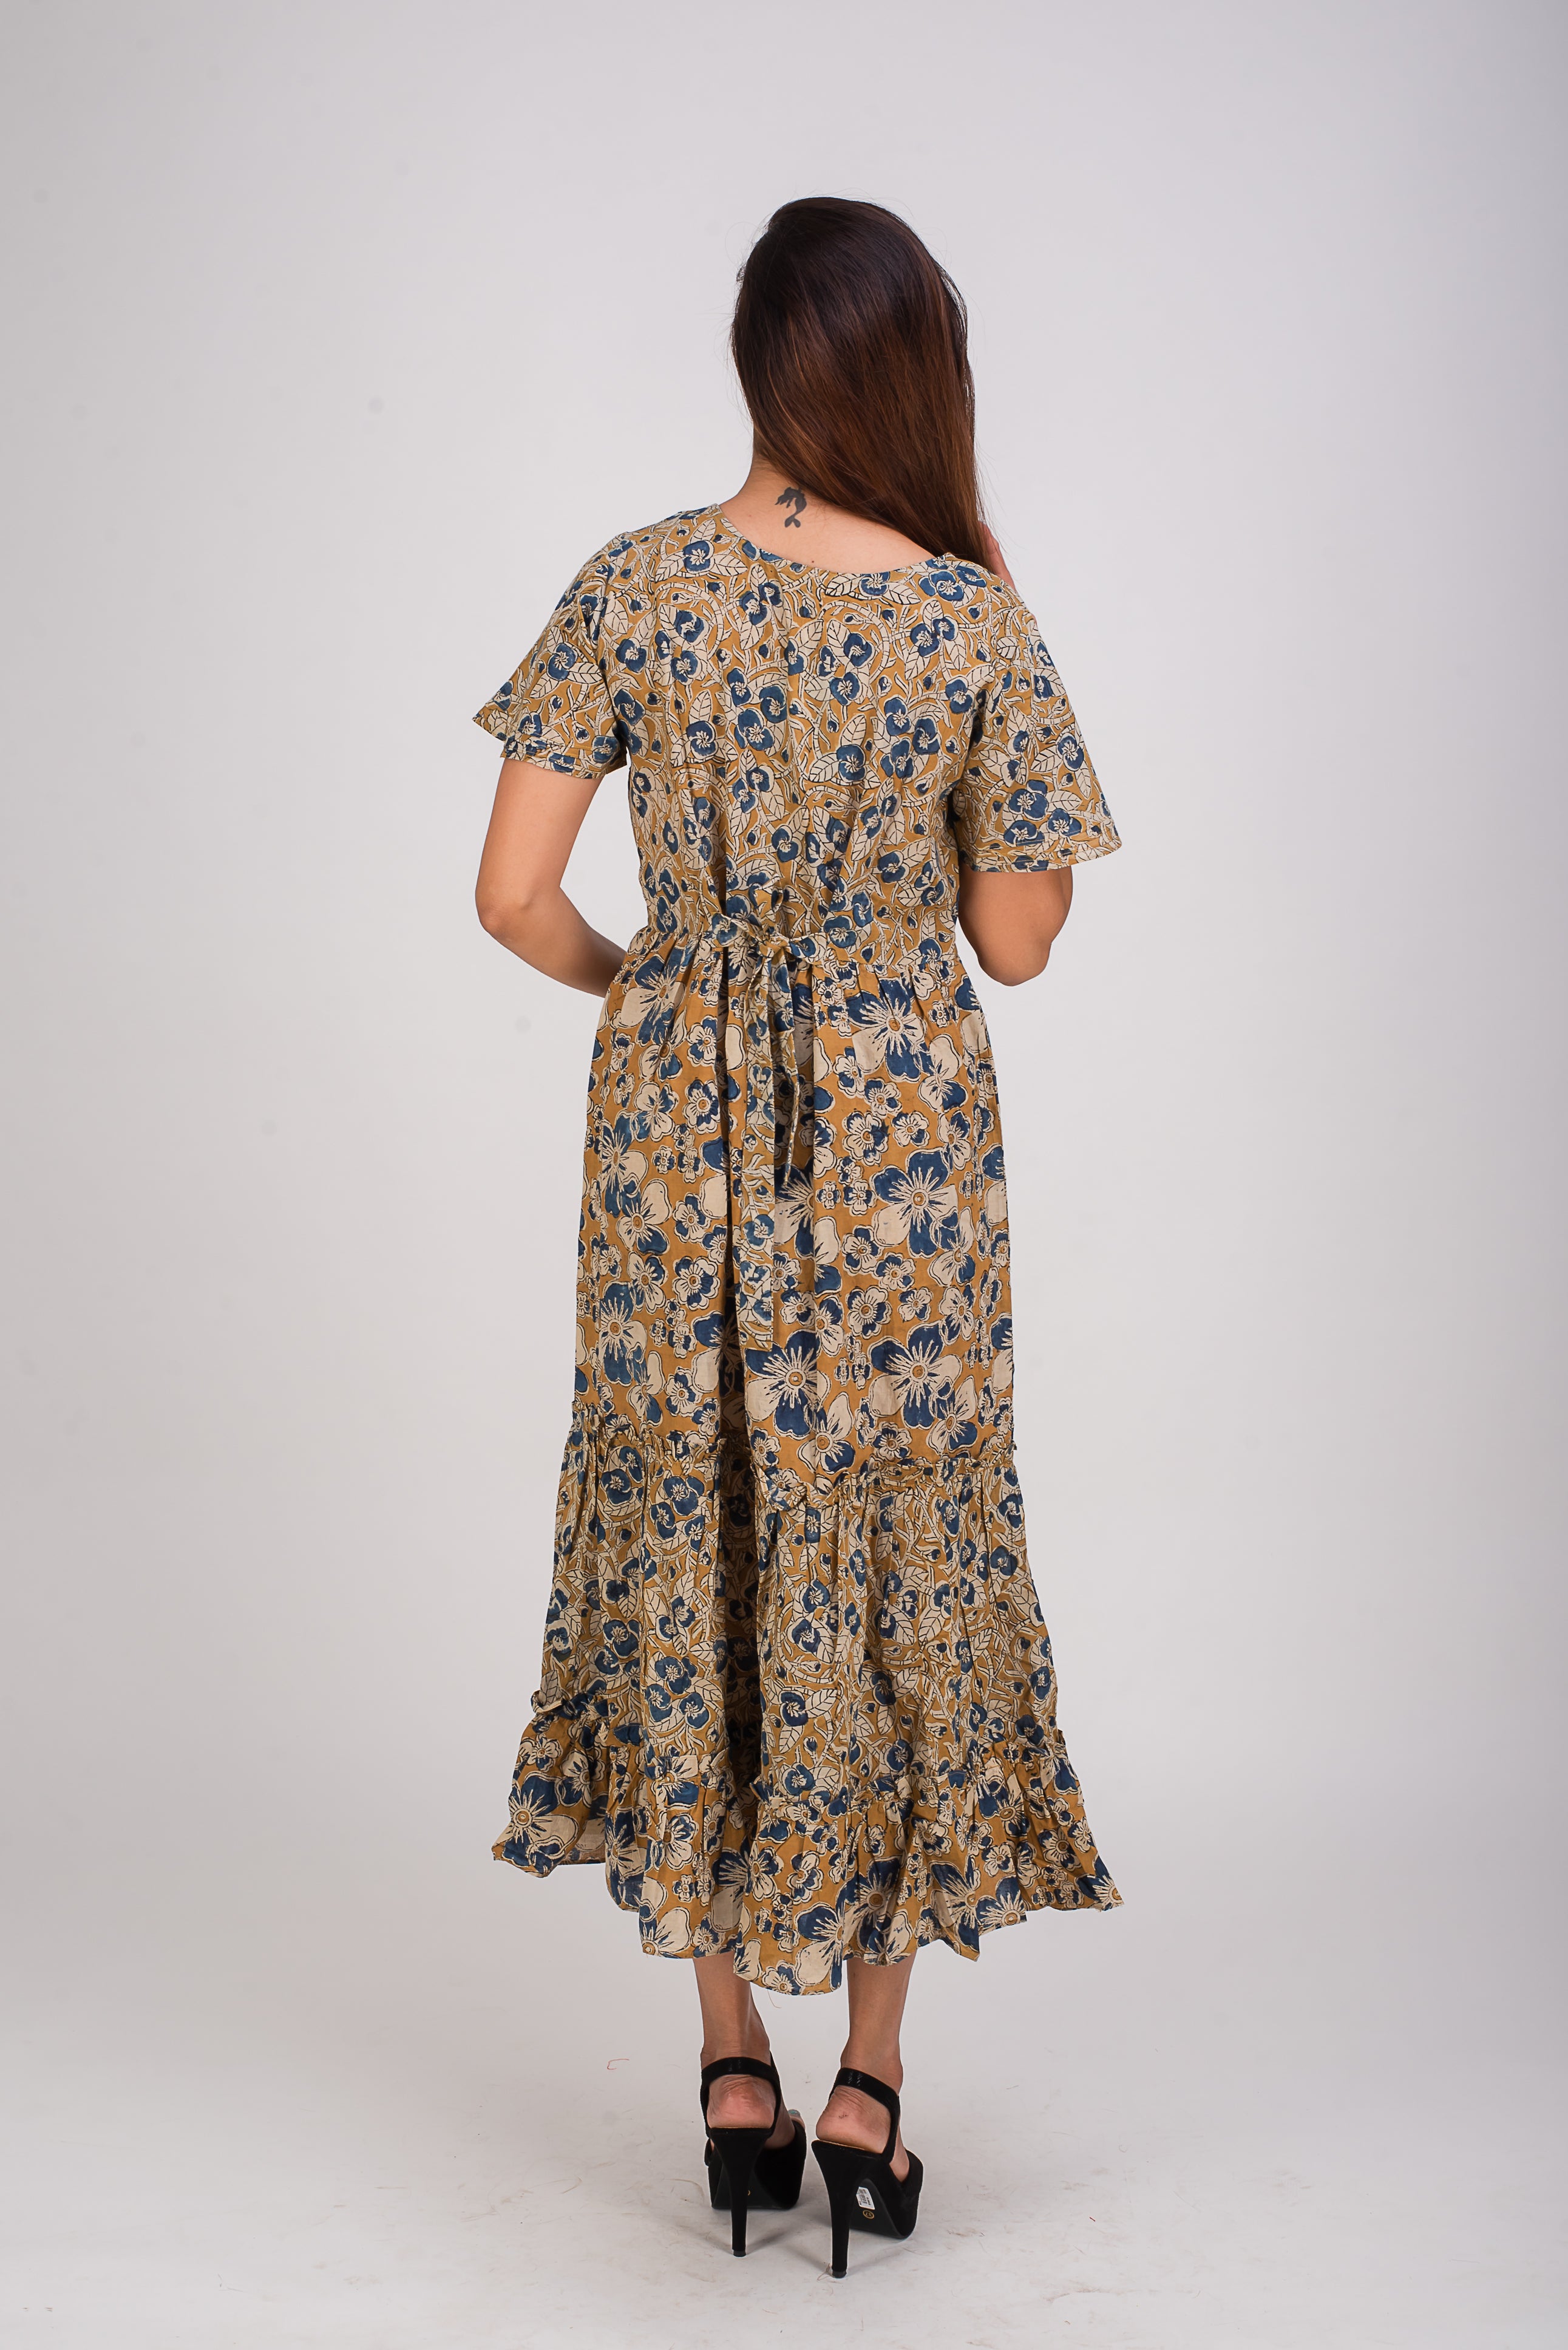 550-143 Whitelotus "Venus" Women's Maxi Dress